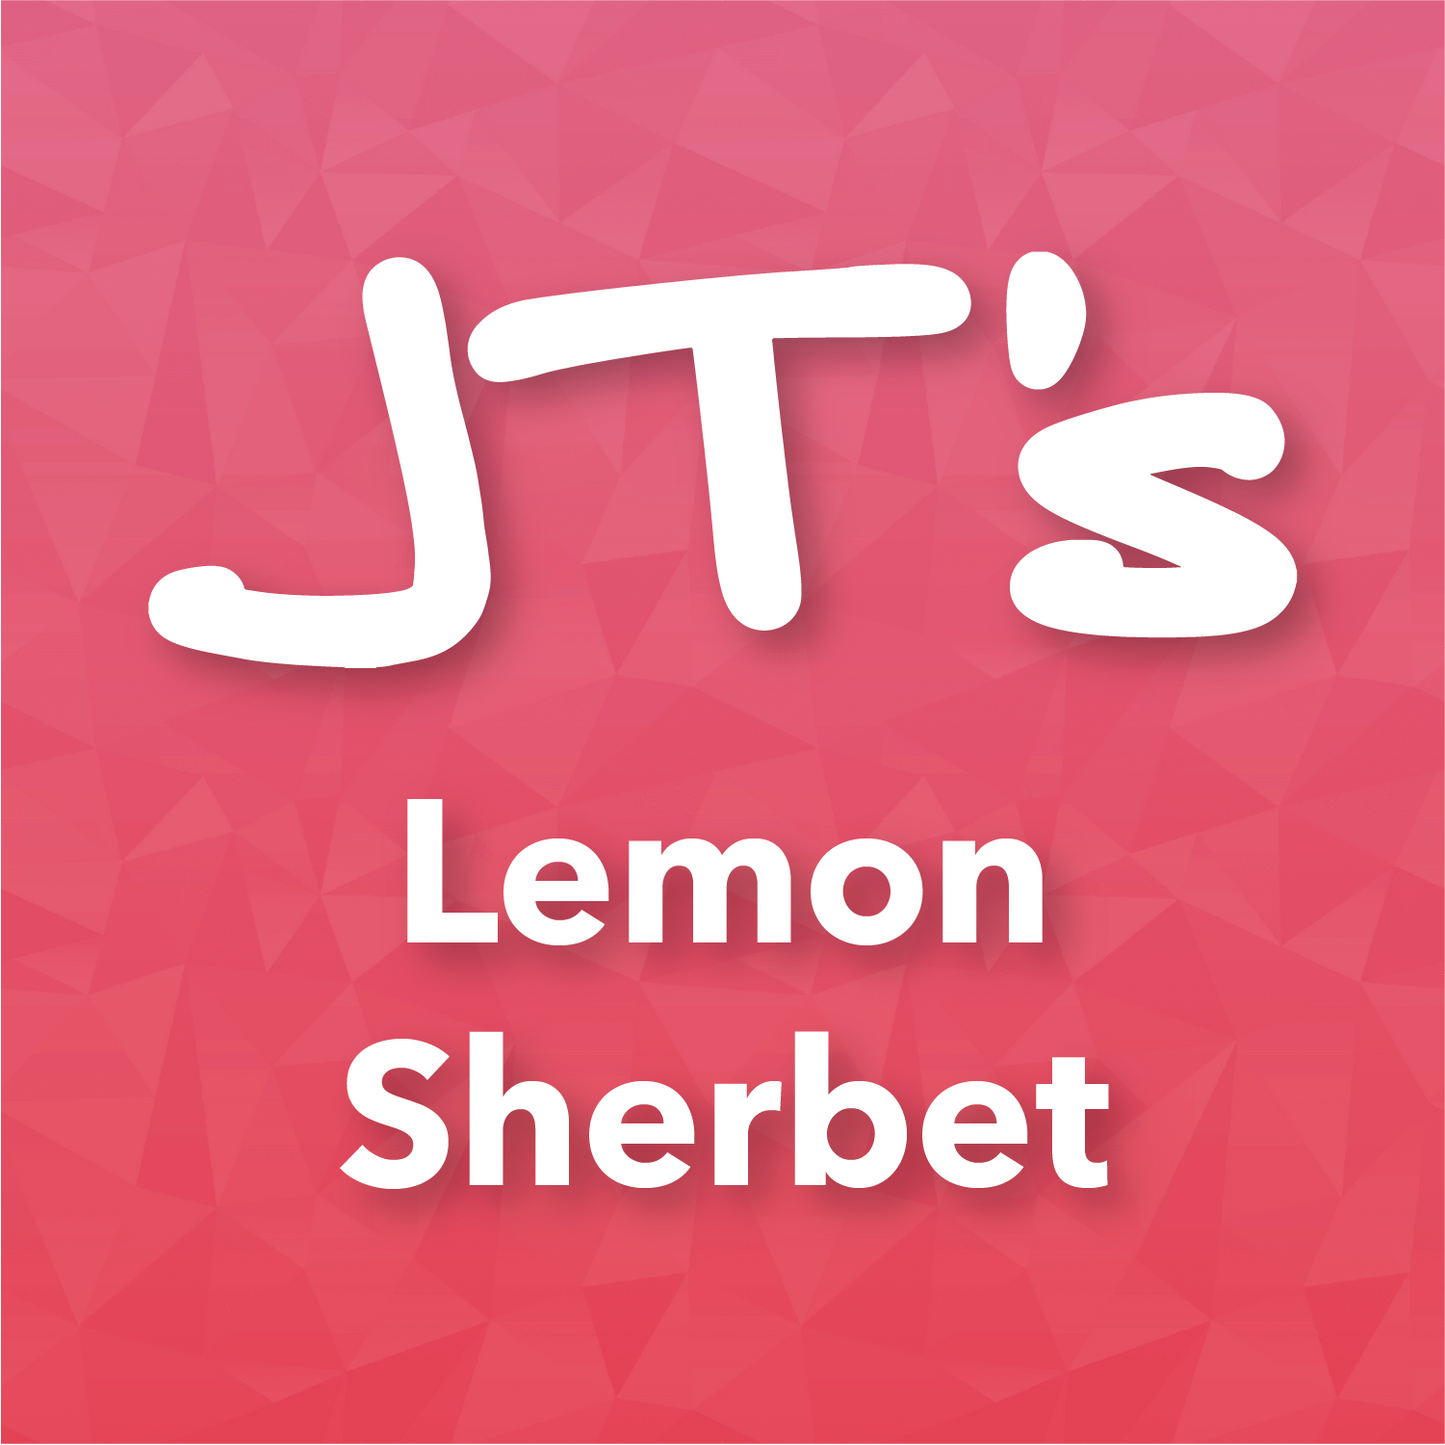 JT's - Lemon Sherbet 10ml